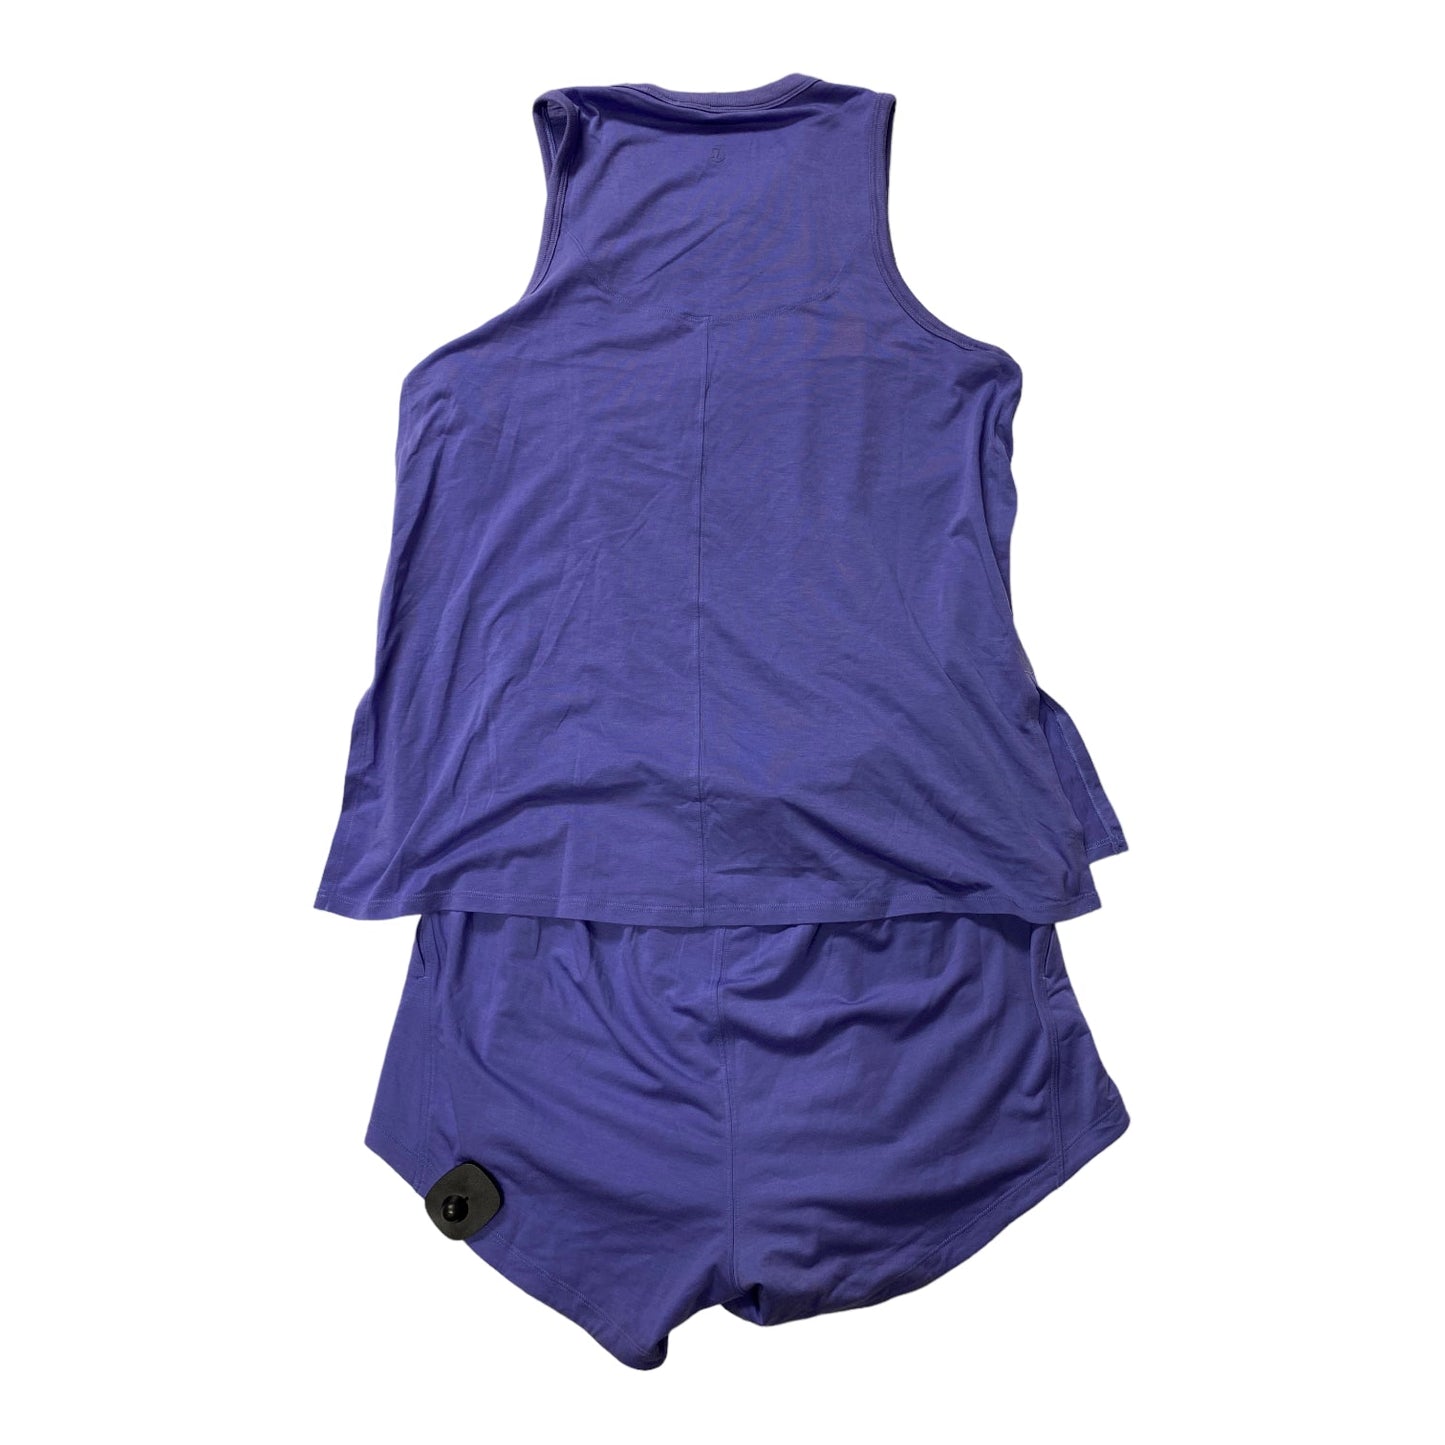 Purple Athletic Dress Lululemon, Size 8